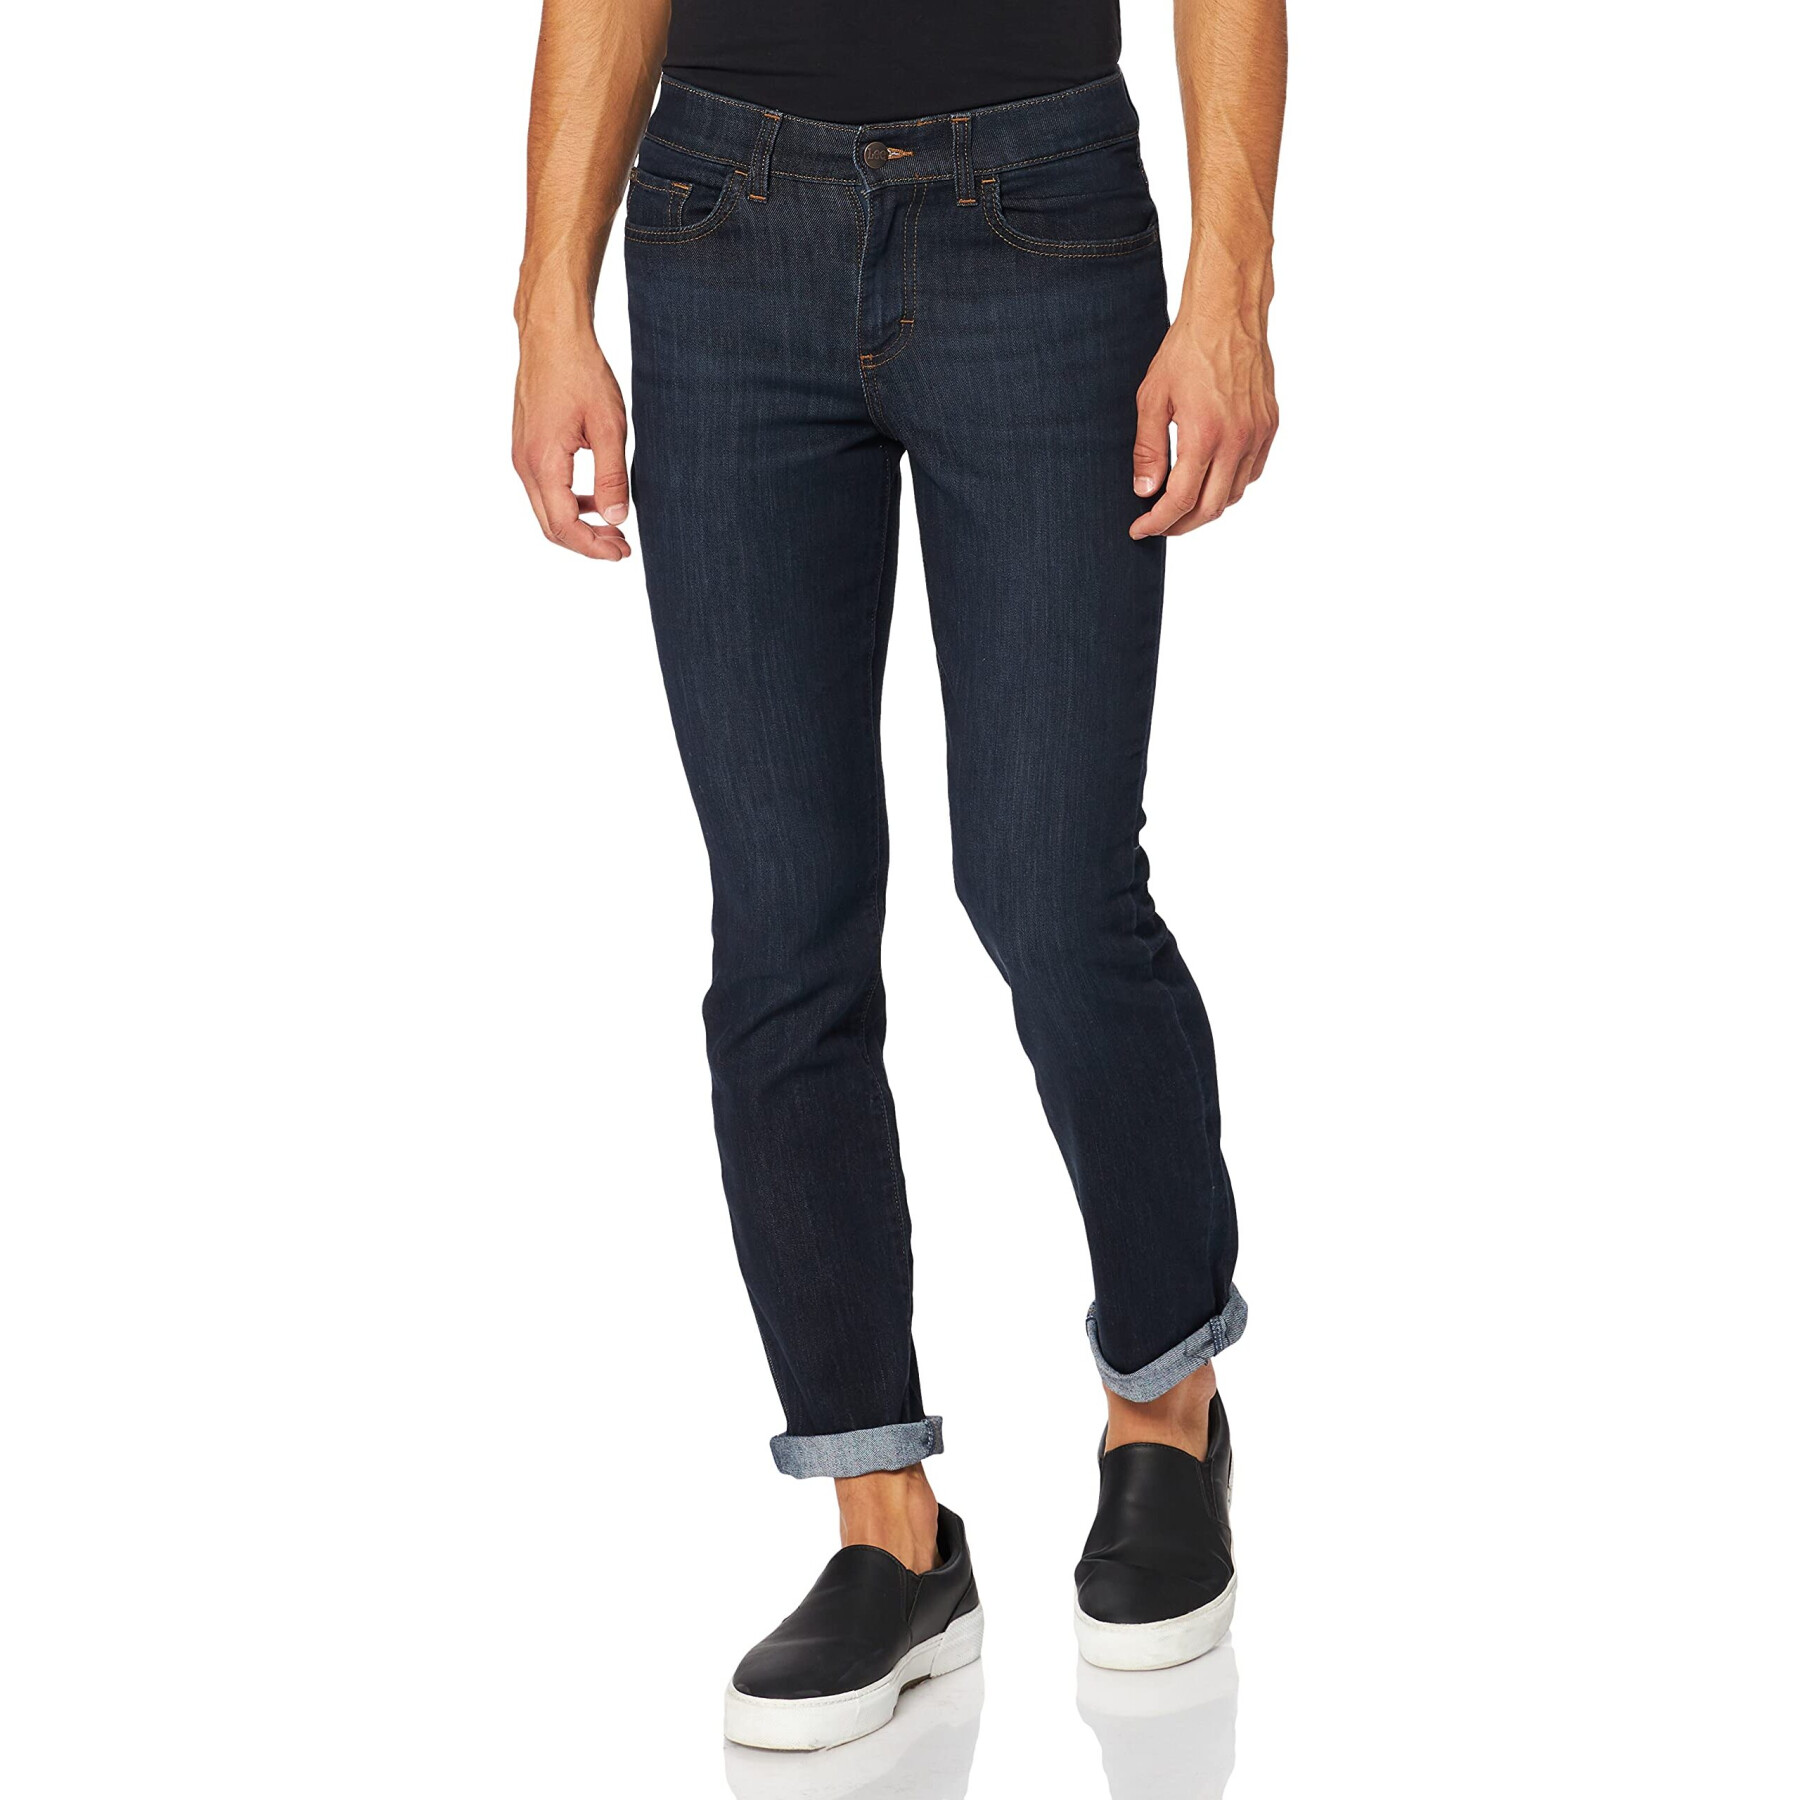 Women's jeans Lee Confort Straight